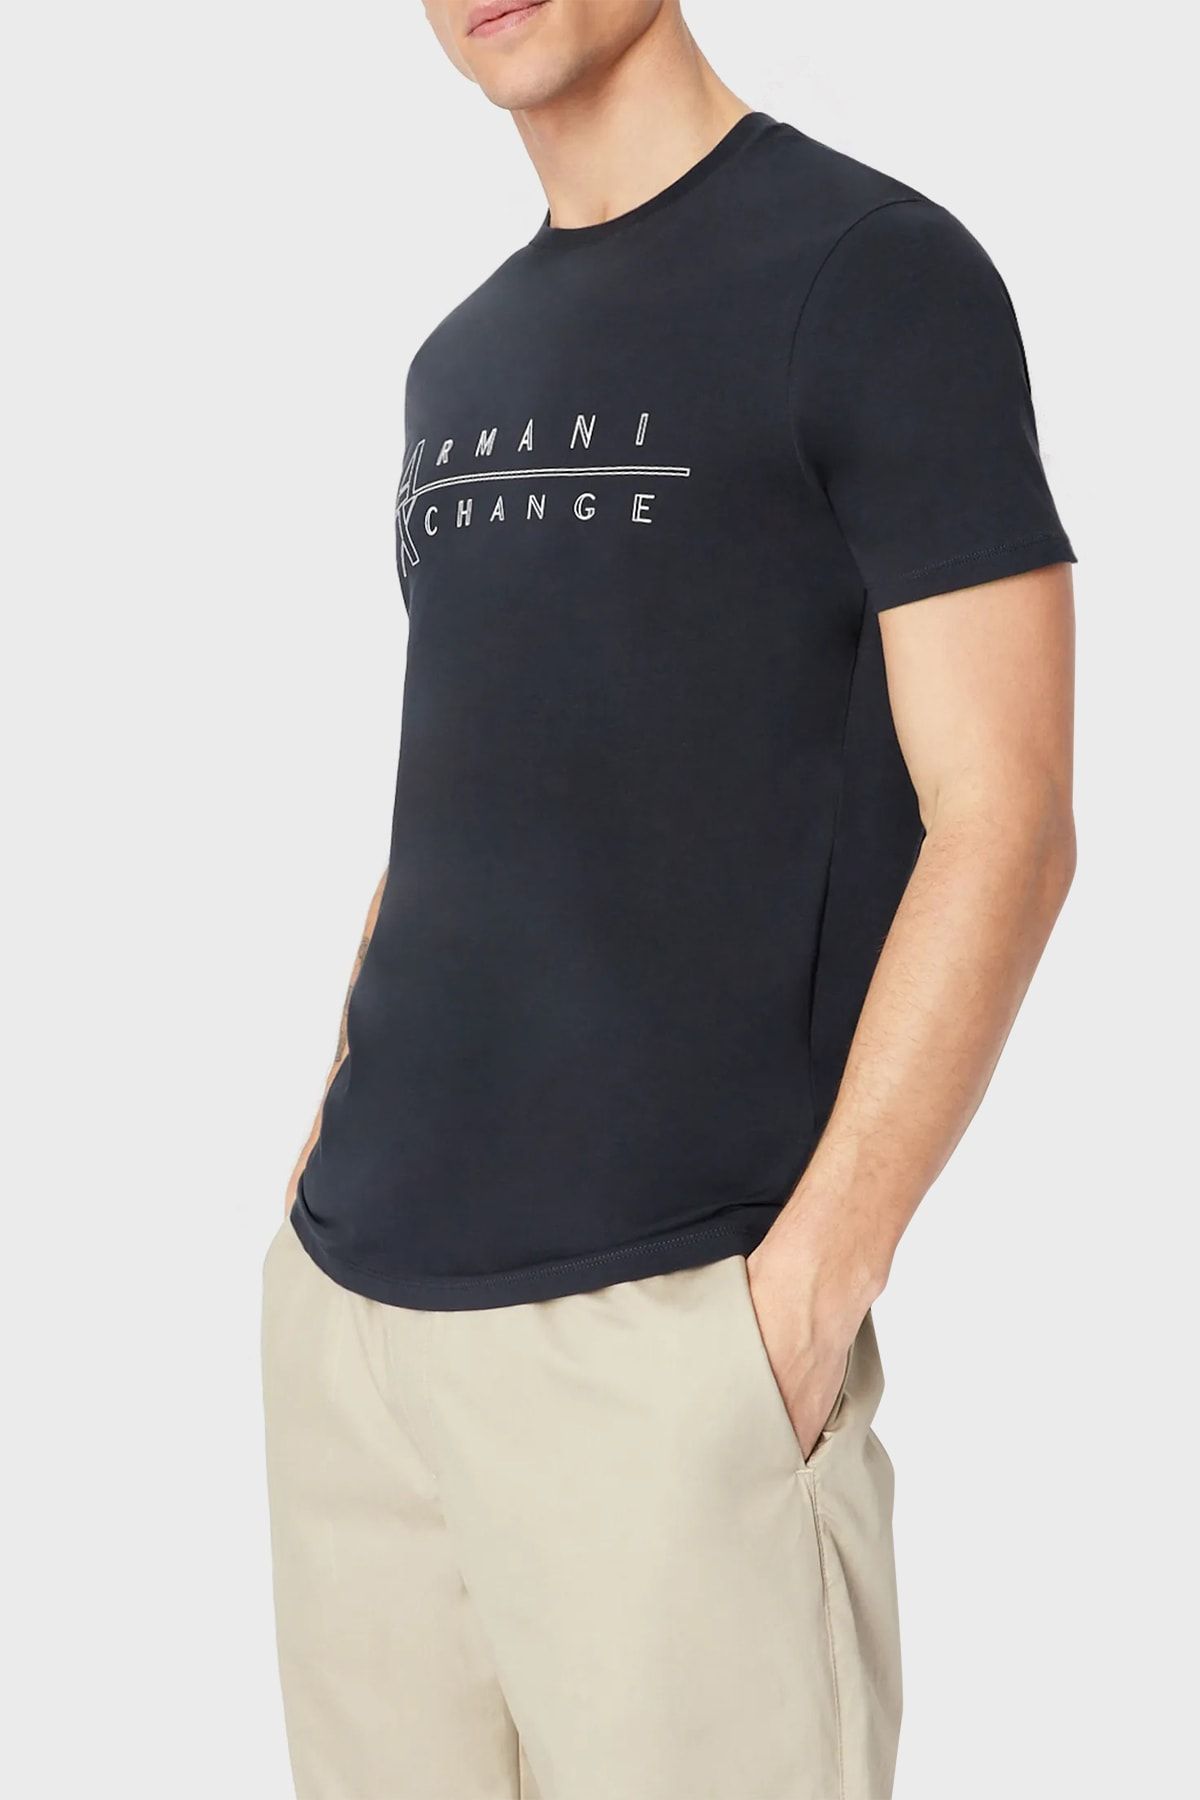 Armani Exchange Pamuklu Slim Fit Bisiklet Yaka T Shirt Erkek T Shirt 3rztbr Zjaaz 1510